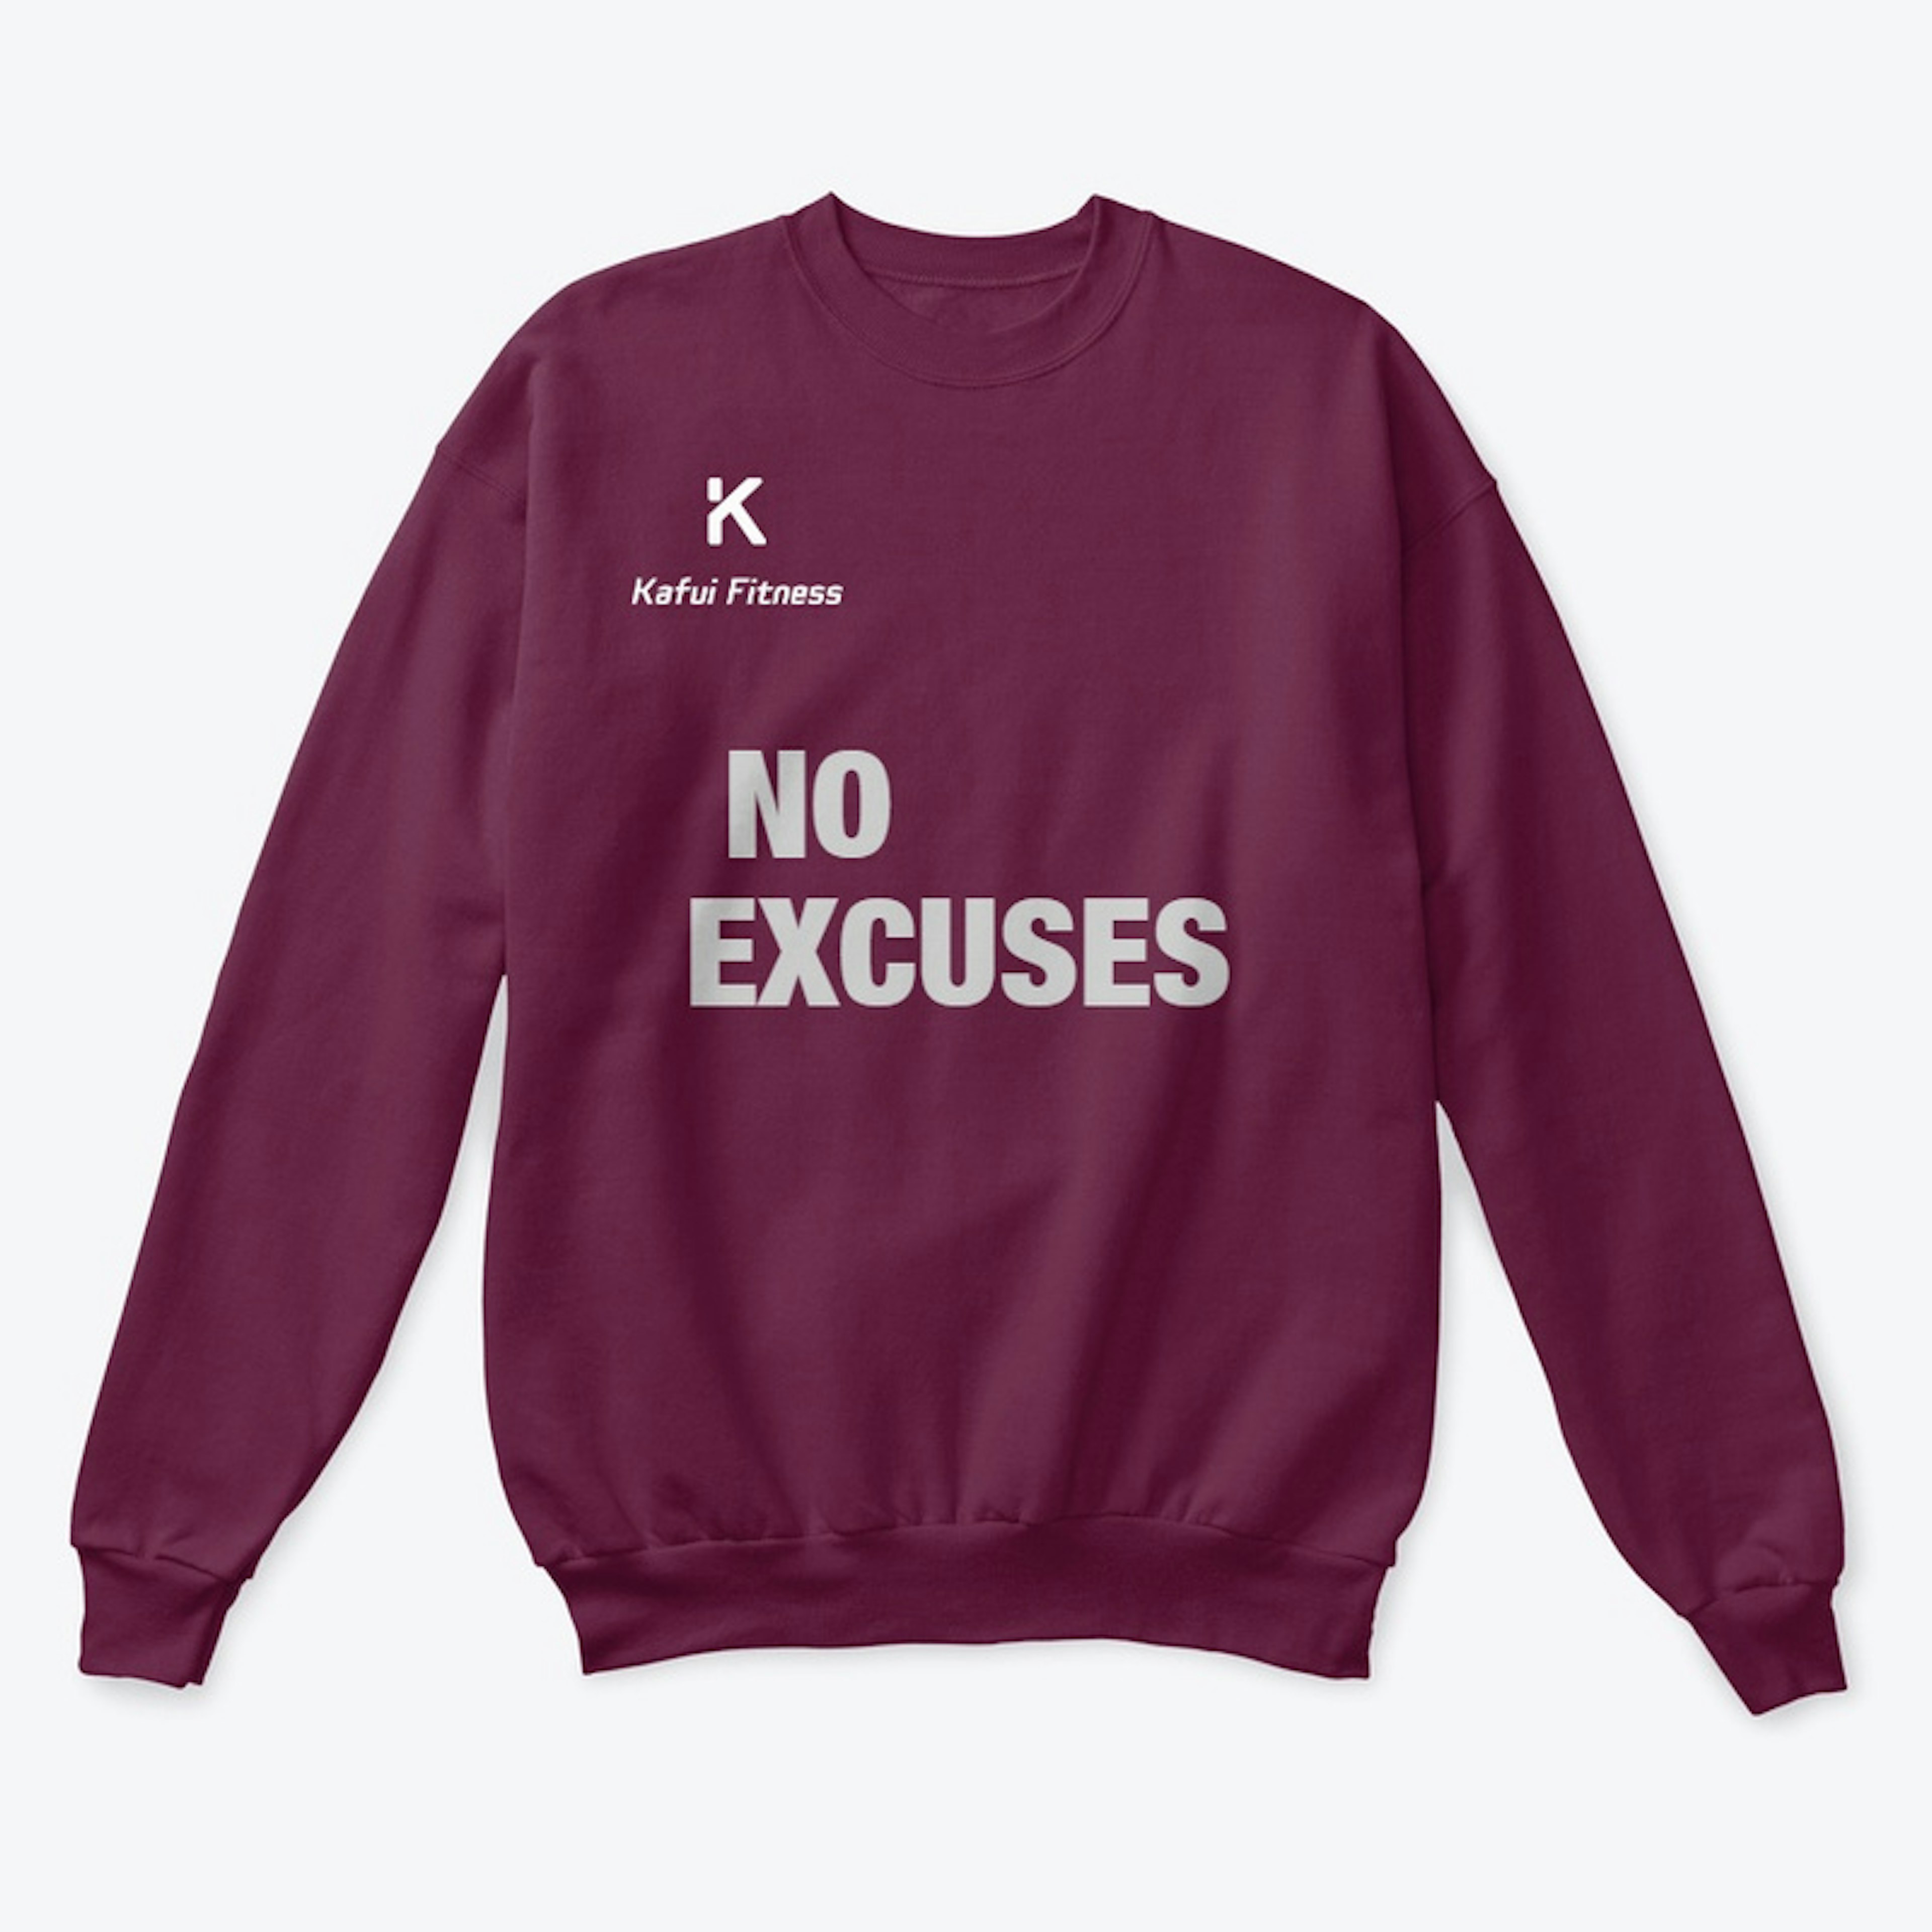 No excuses 